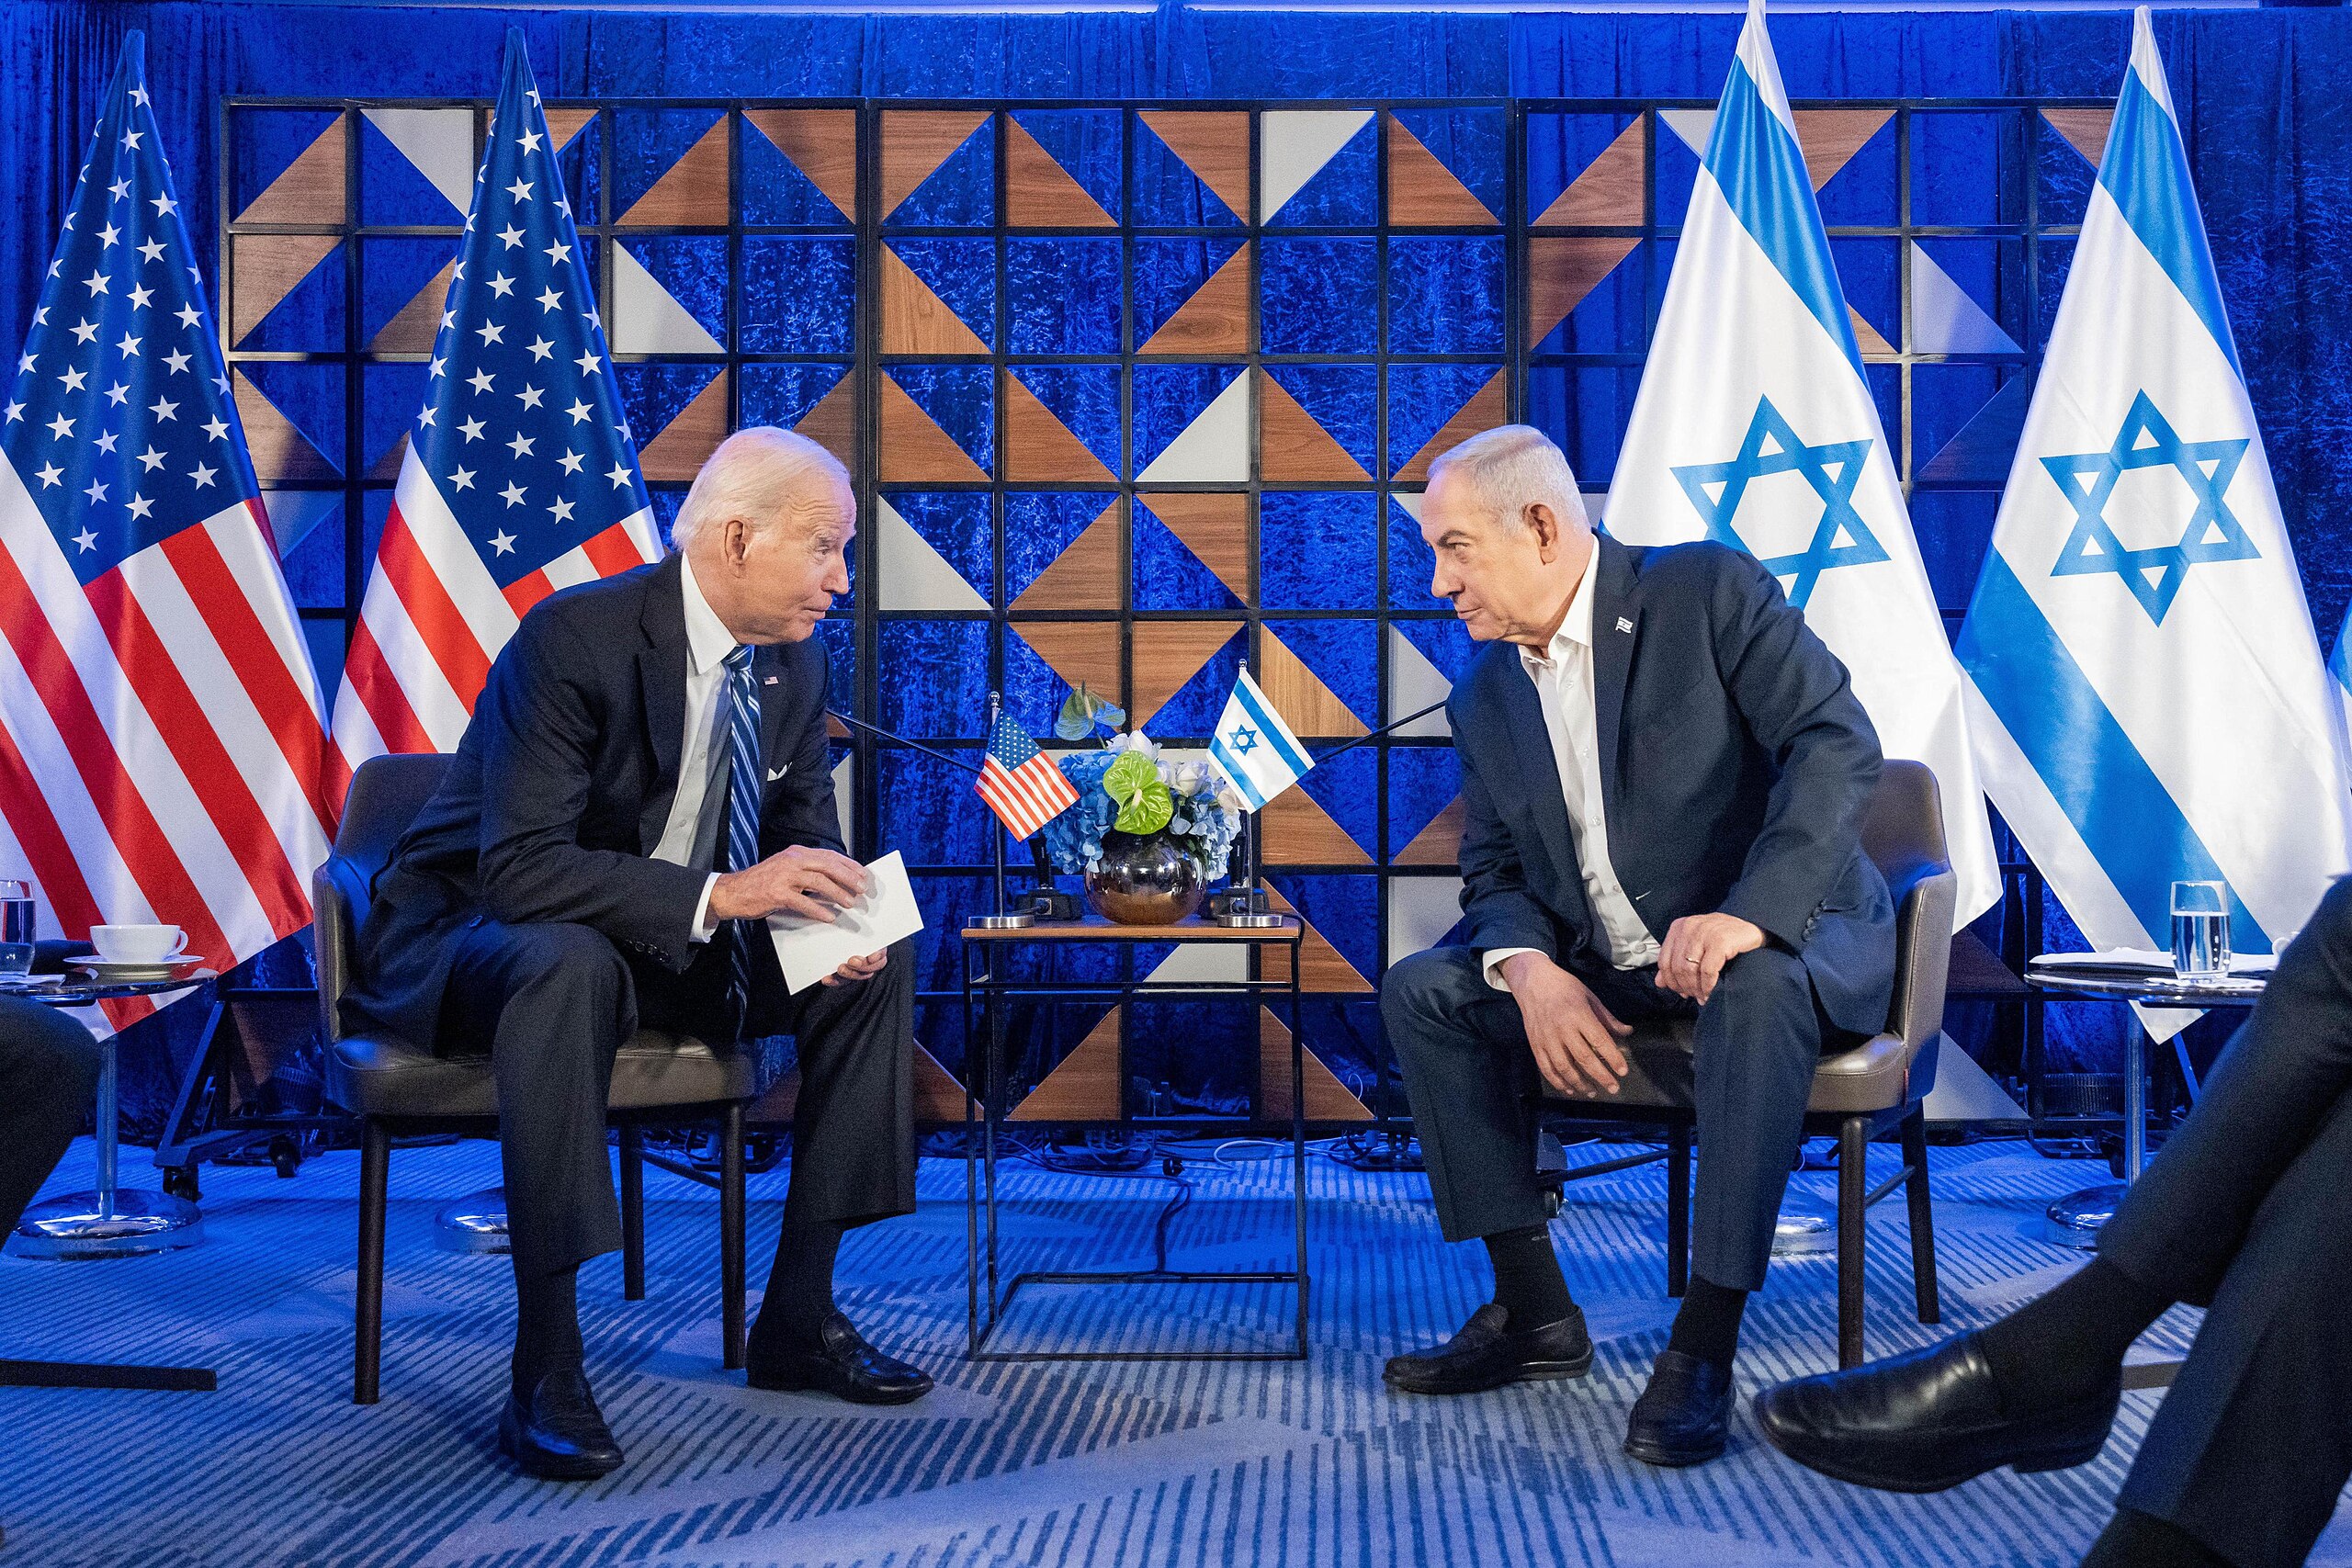 Biden Netanyahu Image The White House Twitter